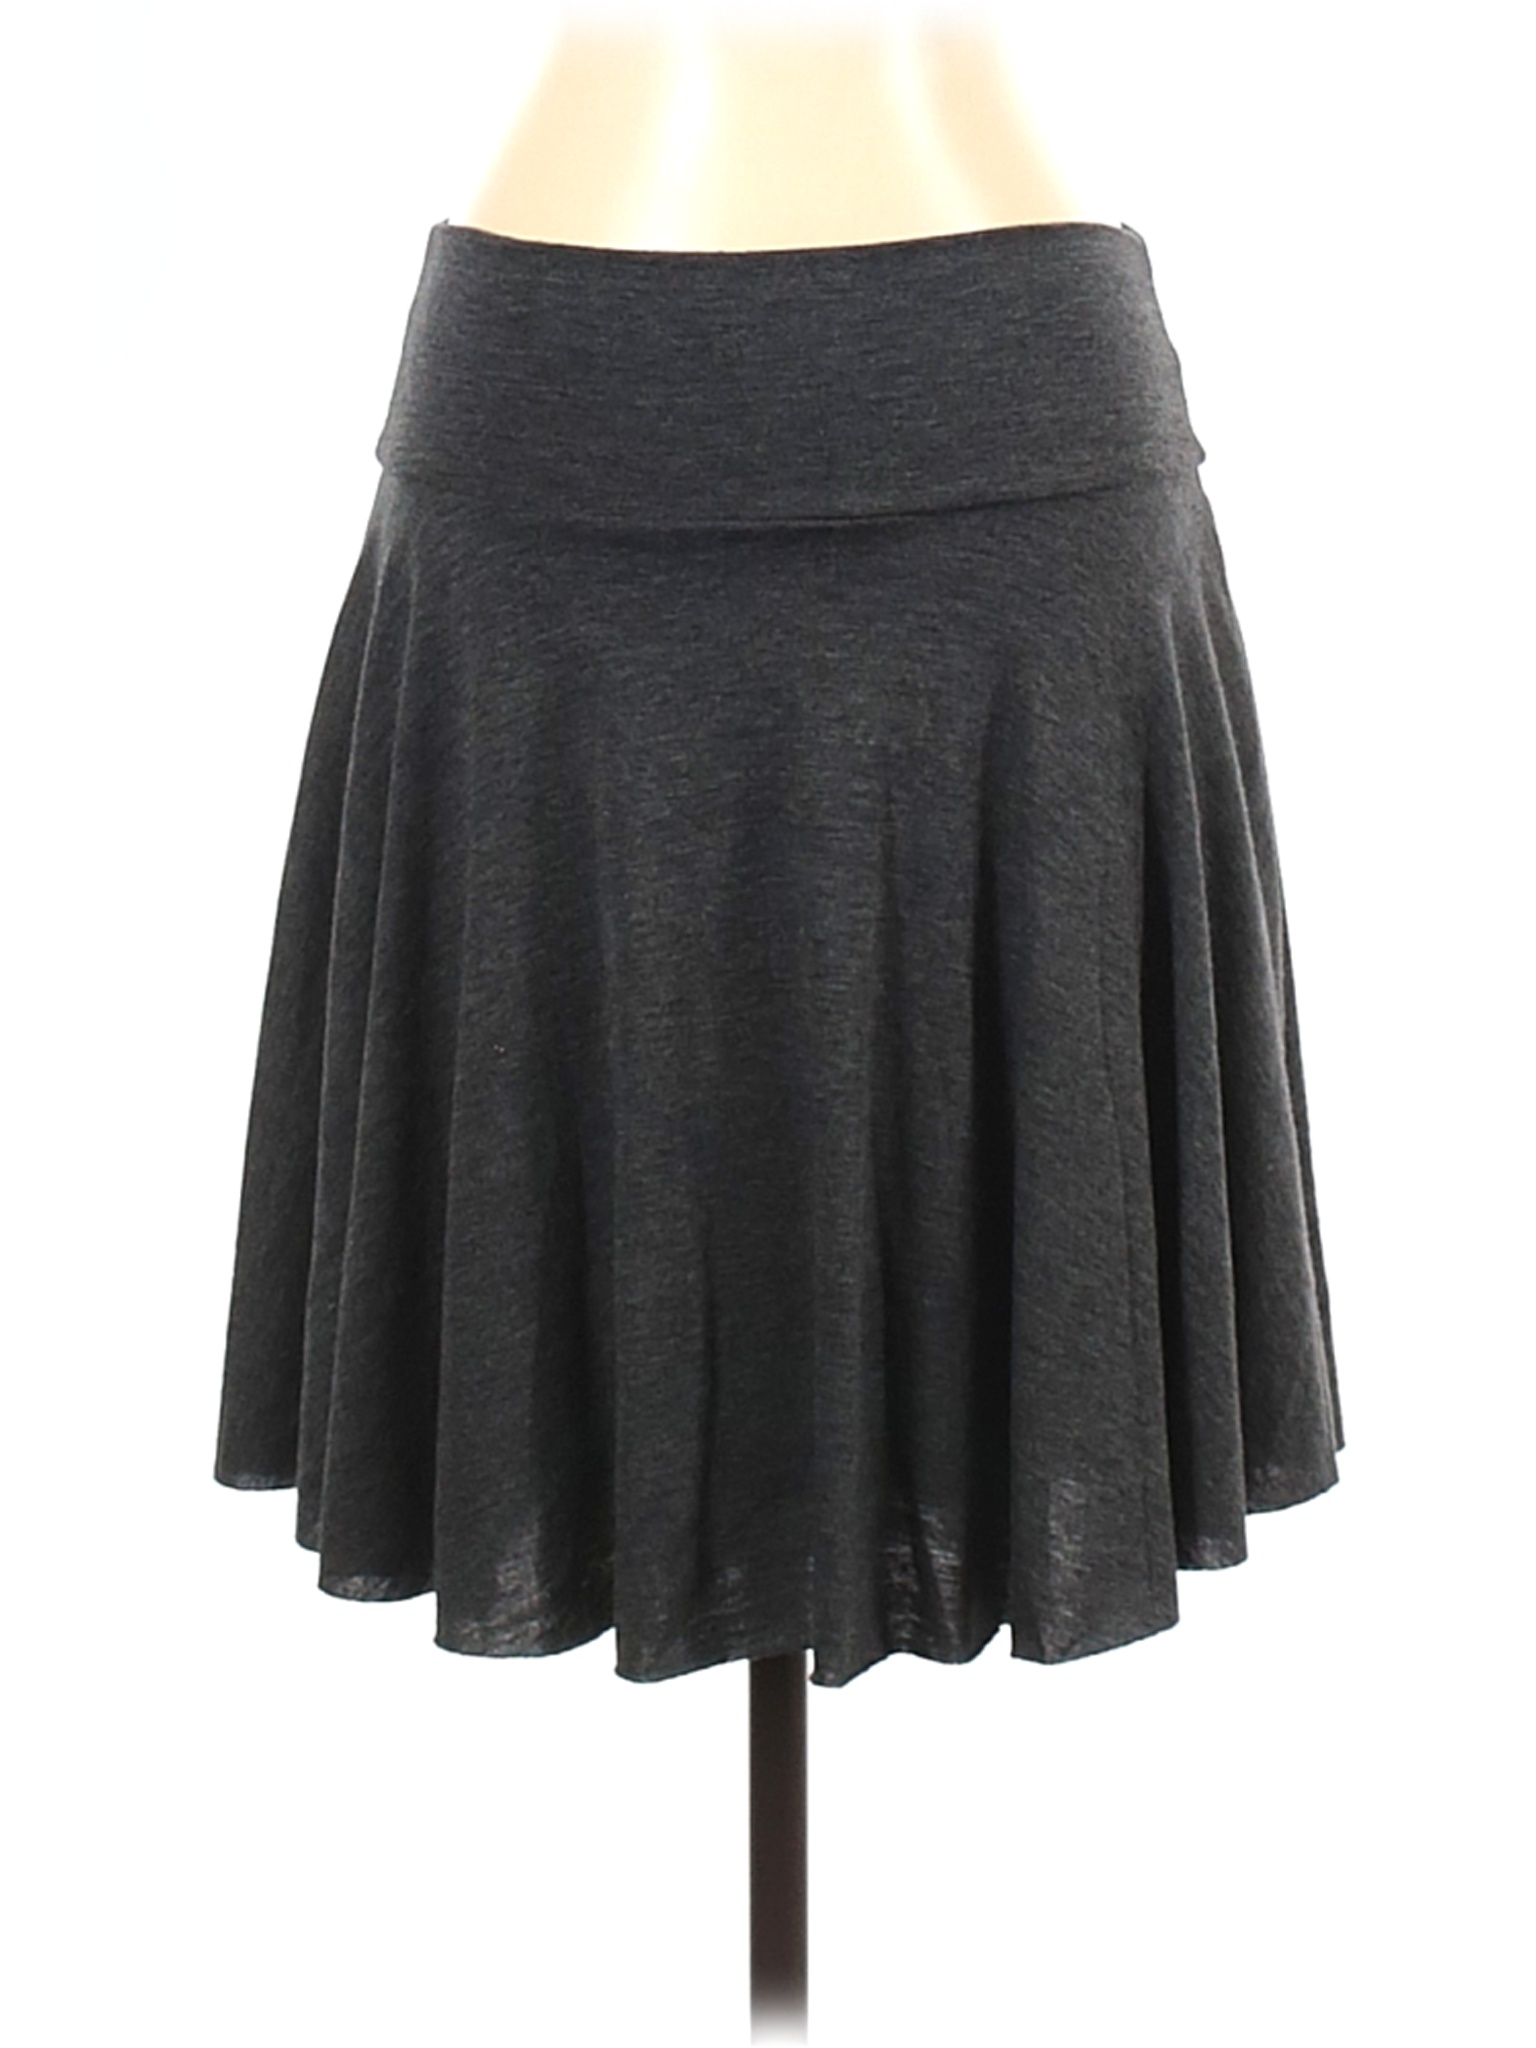 Weston Women Black Casual Skirt S | eBay